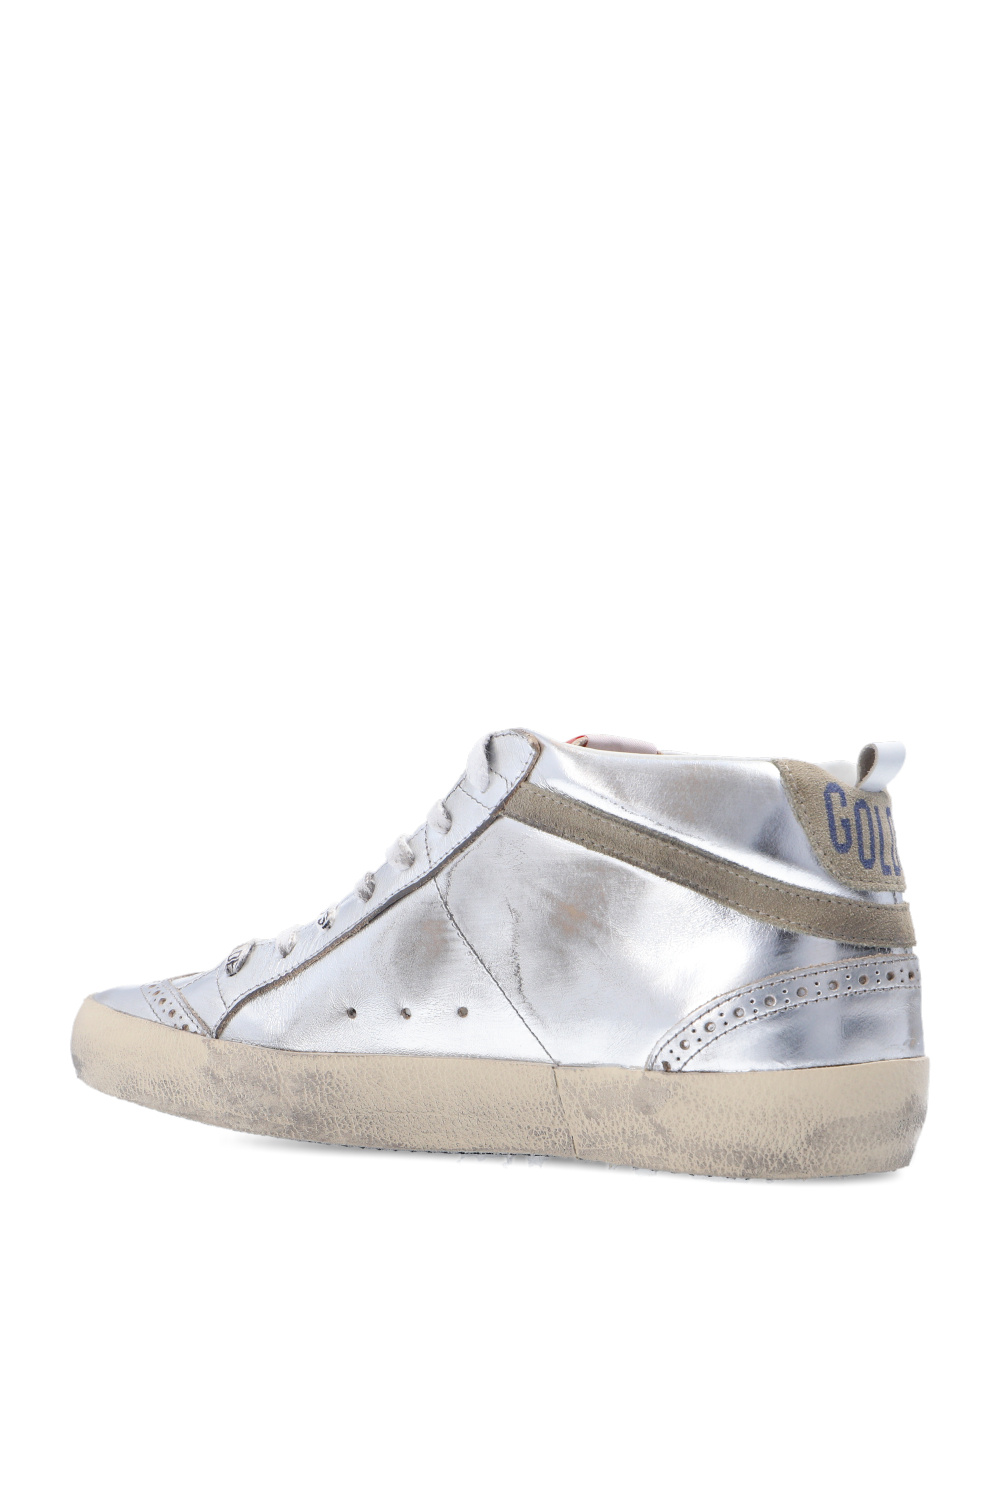 Golden Goose ‘Mid Star Classic’ high-top sneakers